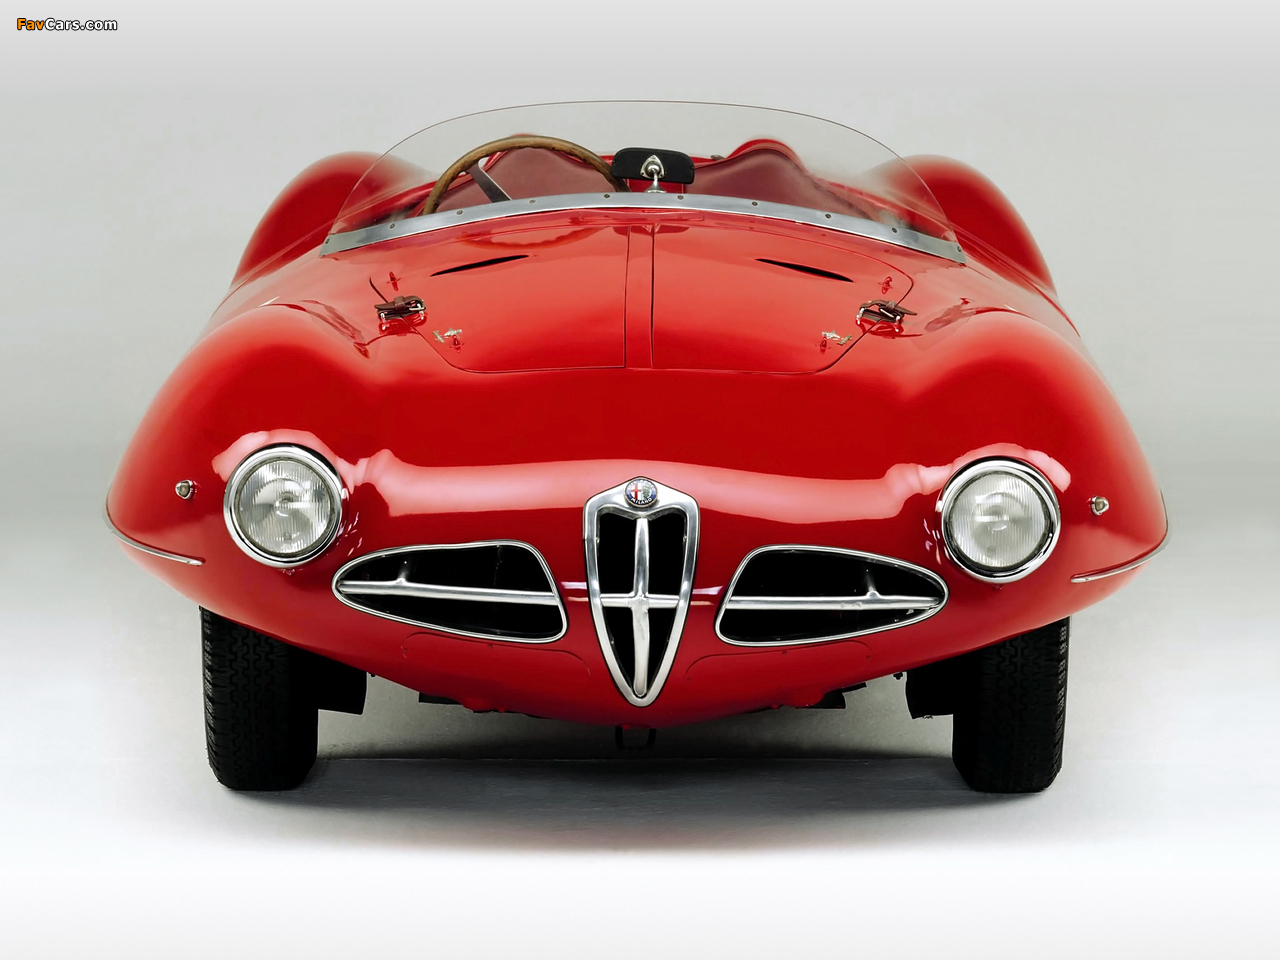 Alfa Romeo 1900 C52 Disco Volante Spider 1359 (1952) photos (1280 x 960)